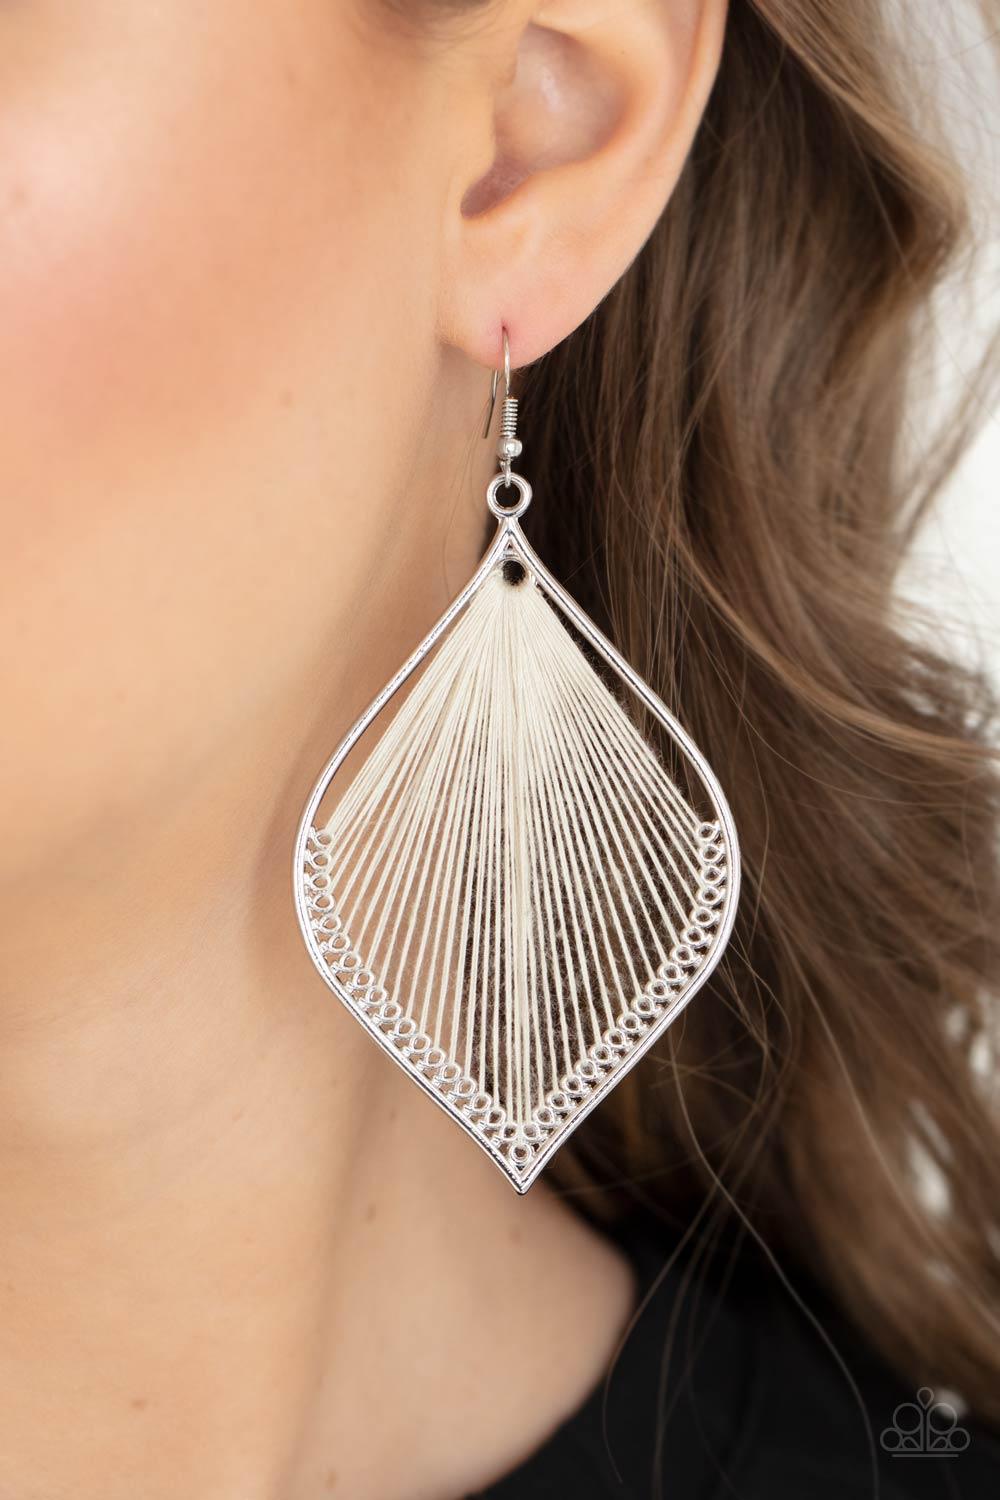 String Theory White Earrings - Jewelry by Bretta